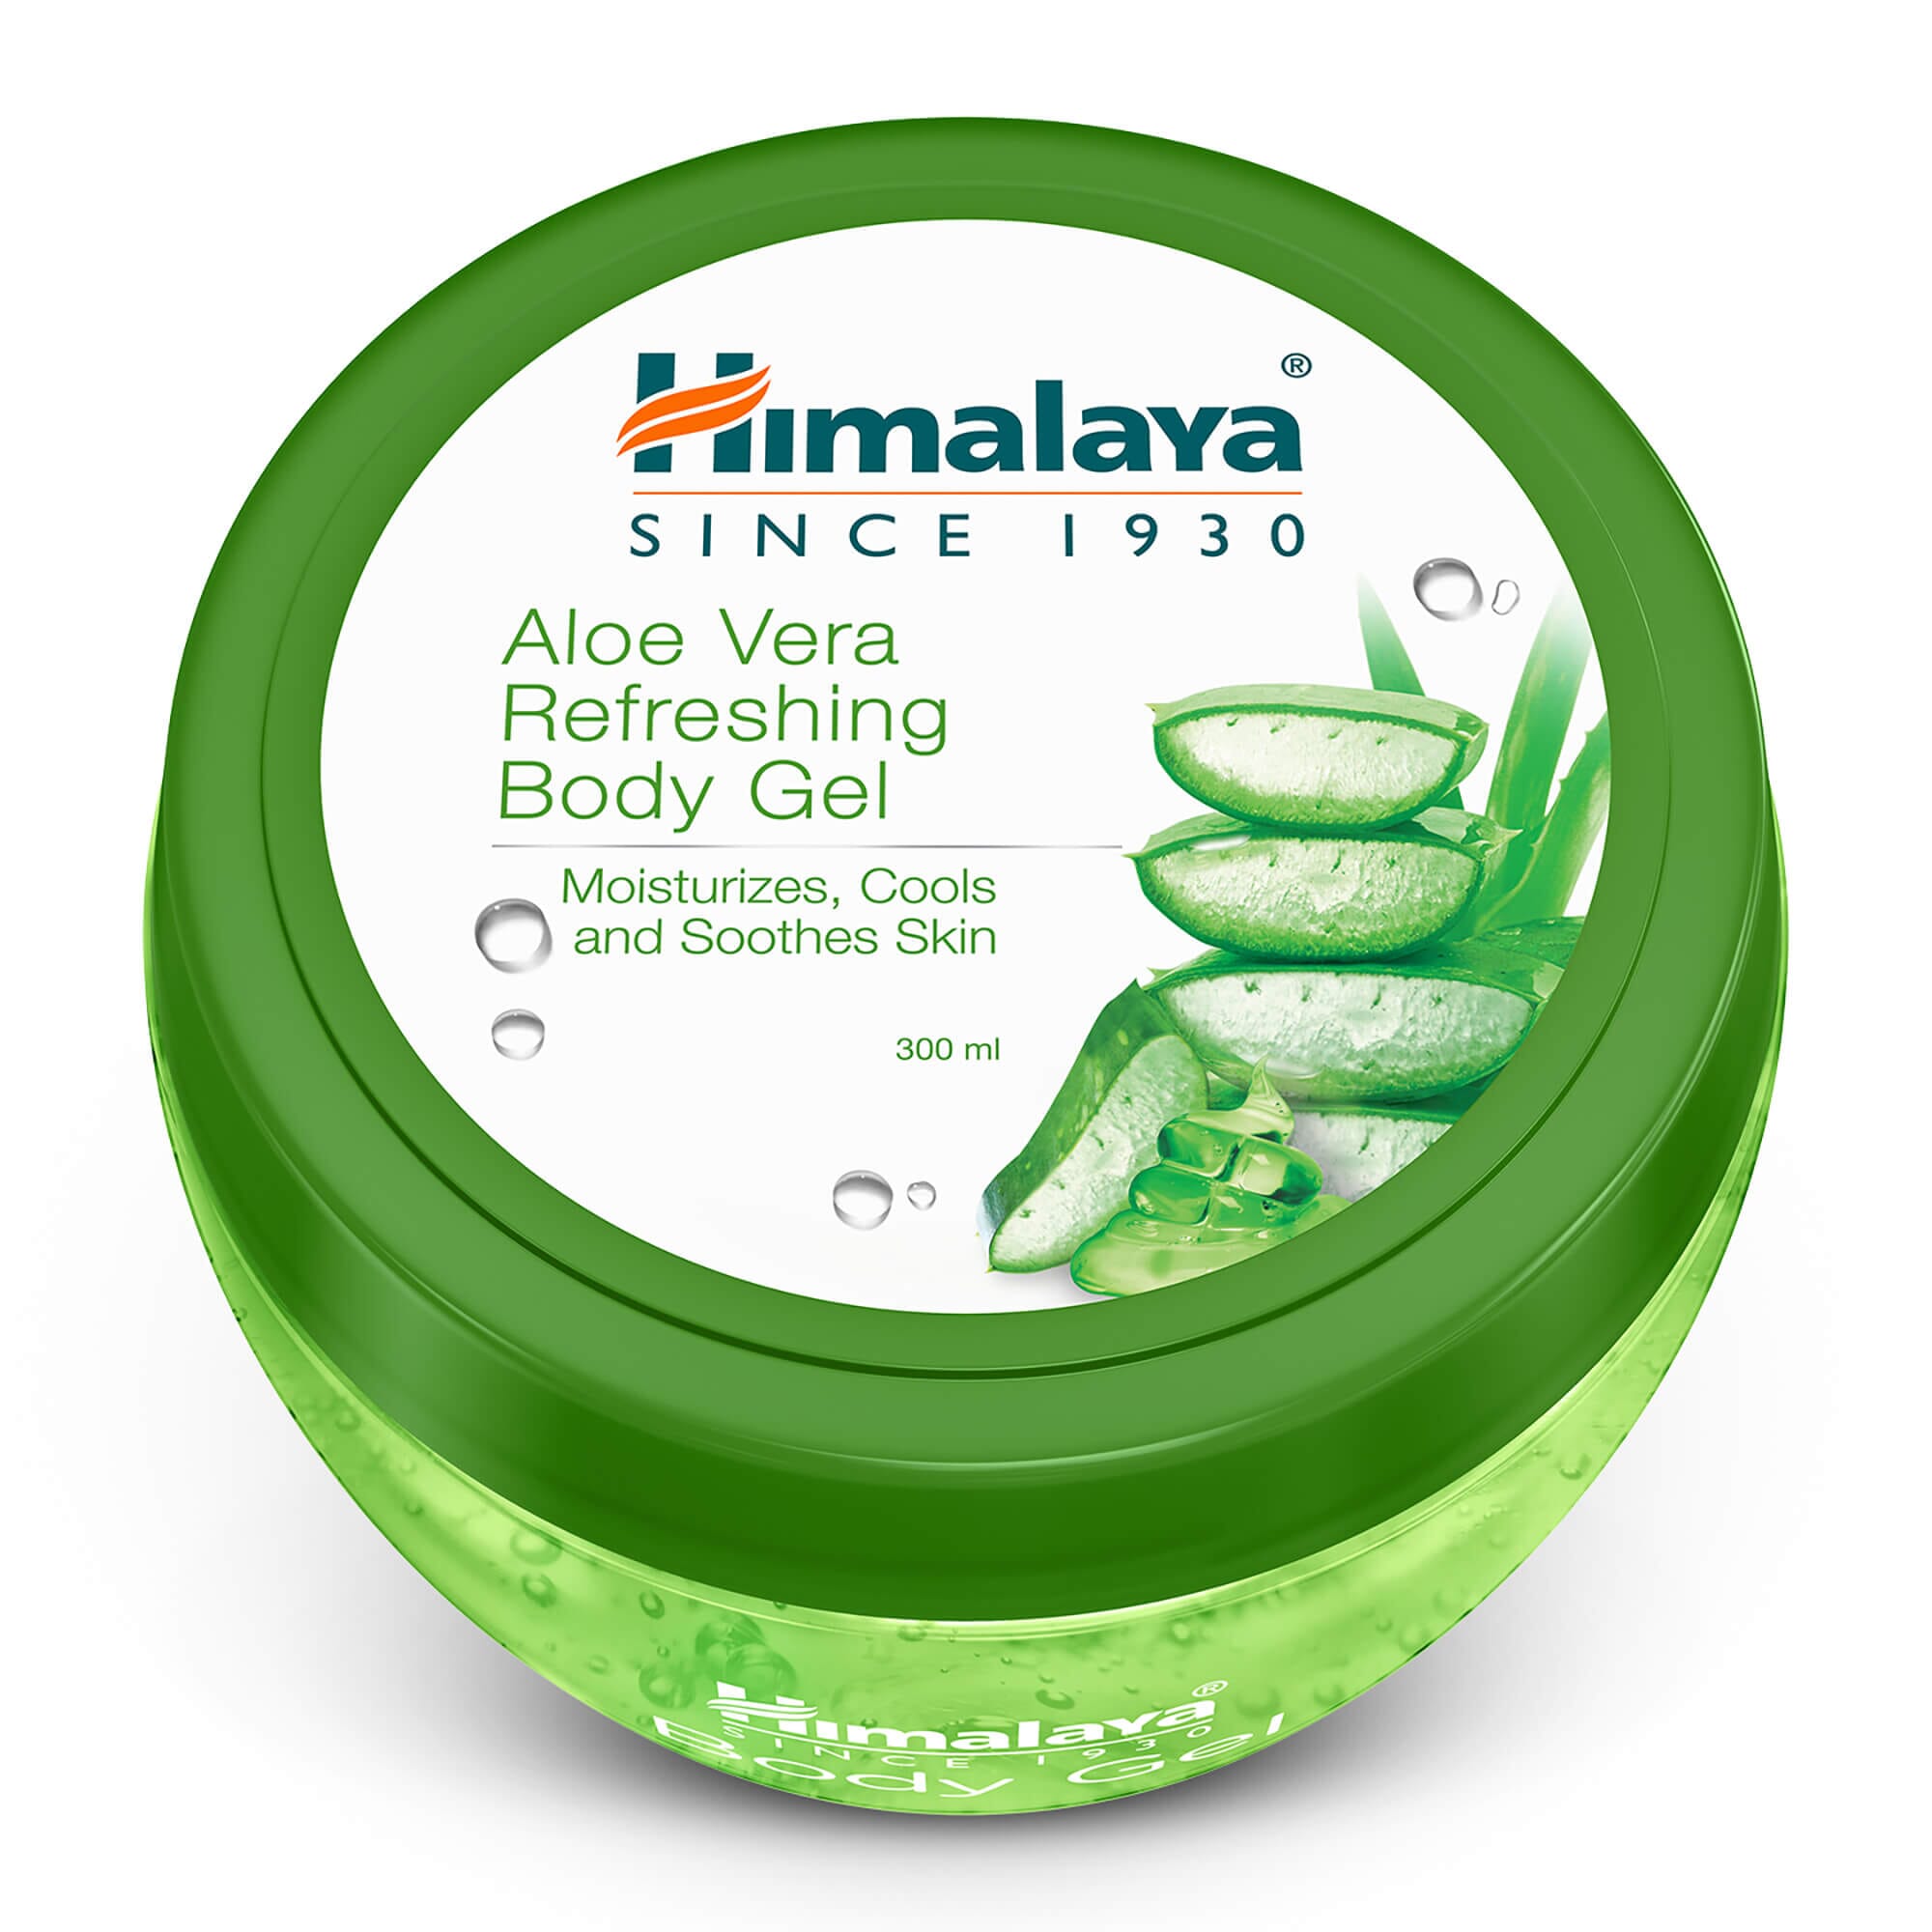 Aloe Vera Refreshing Body Gel